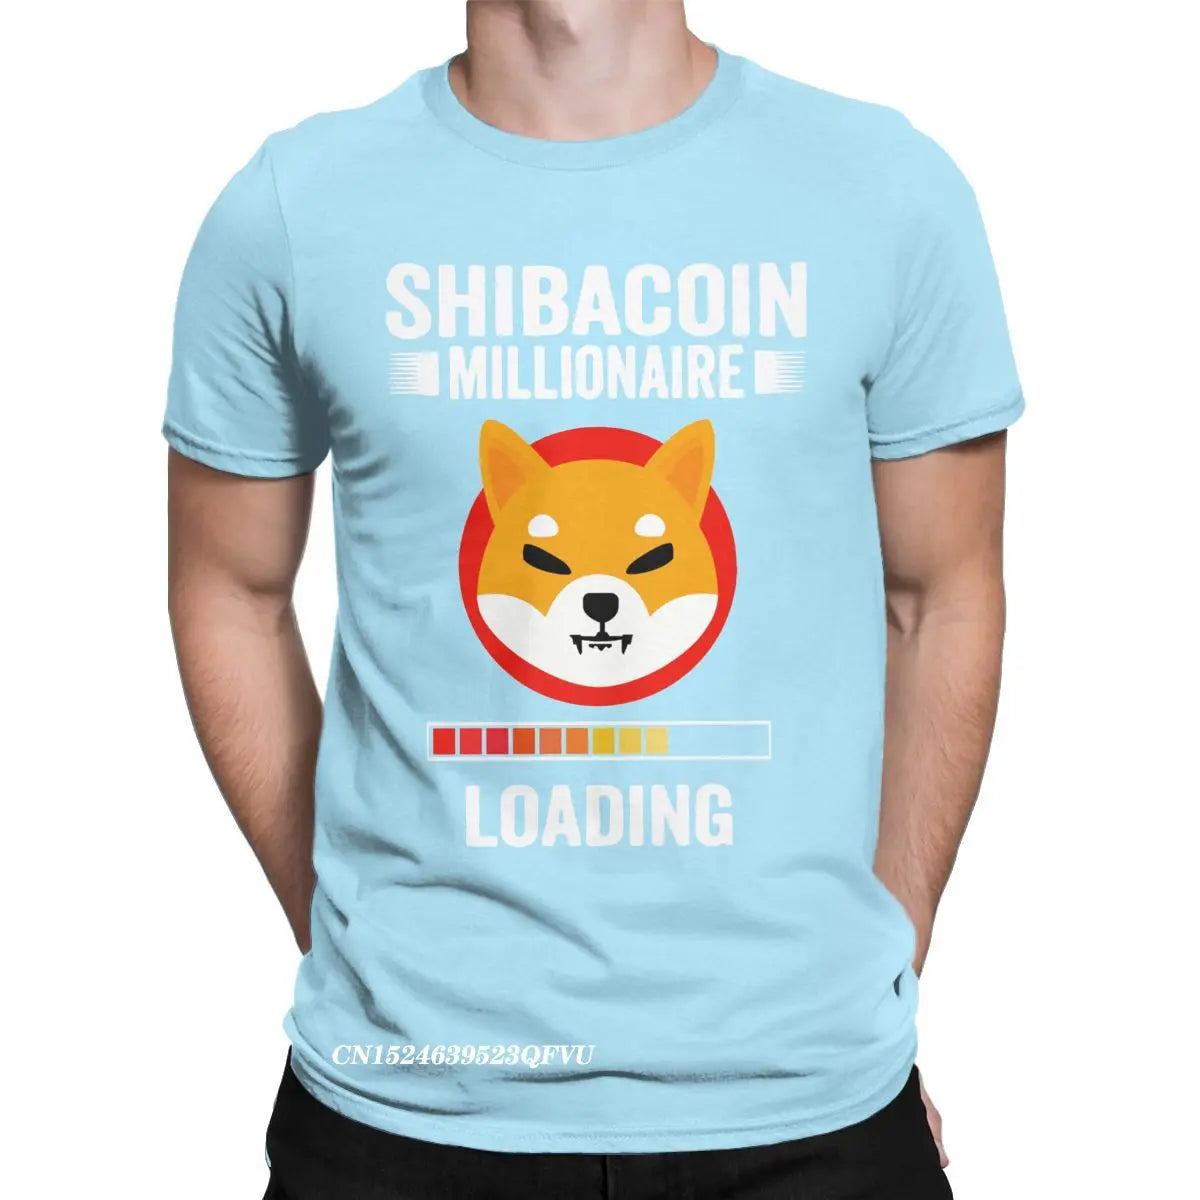 Shiba Inu Hodler T-Shirt For SHIB Millionaires